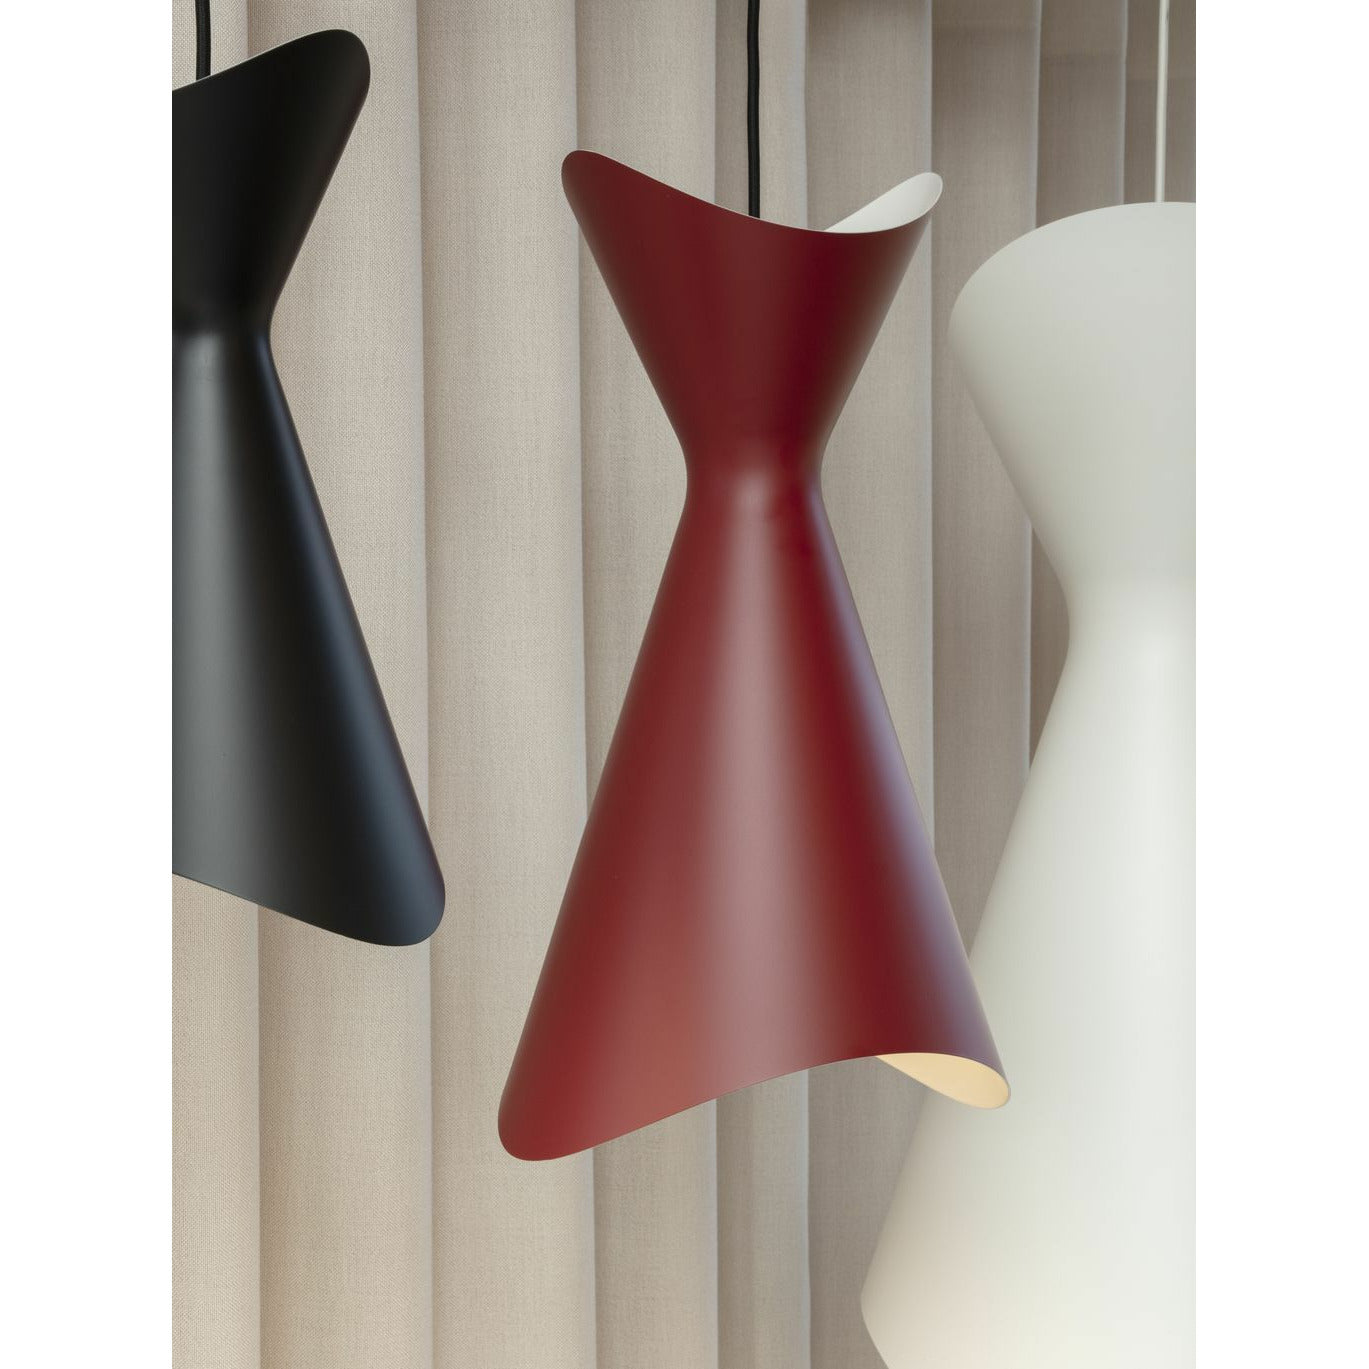 Lyfa Ninotchka hanger 19,5 cm, rood